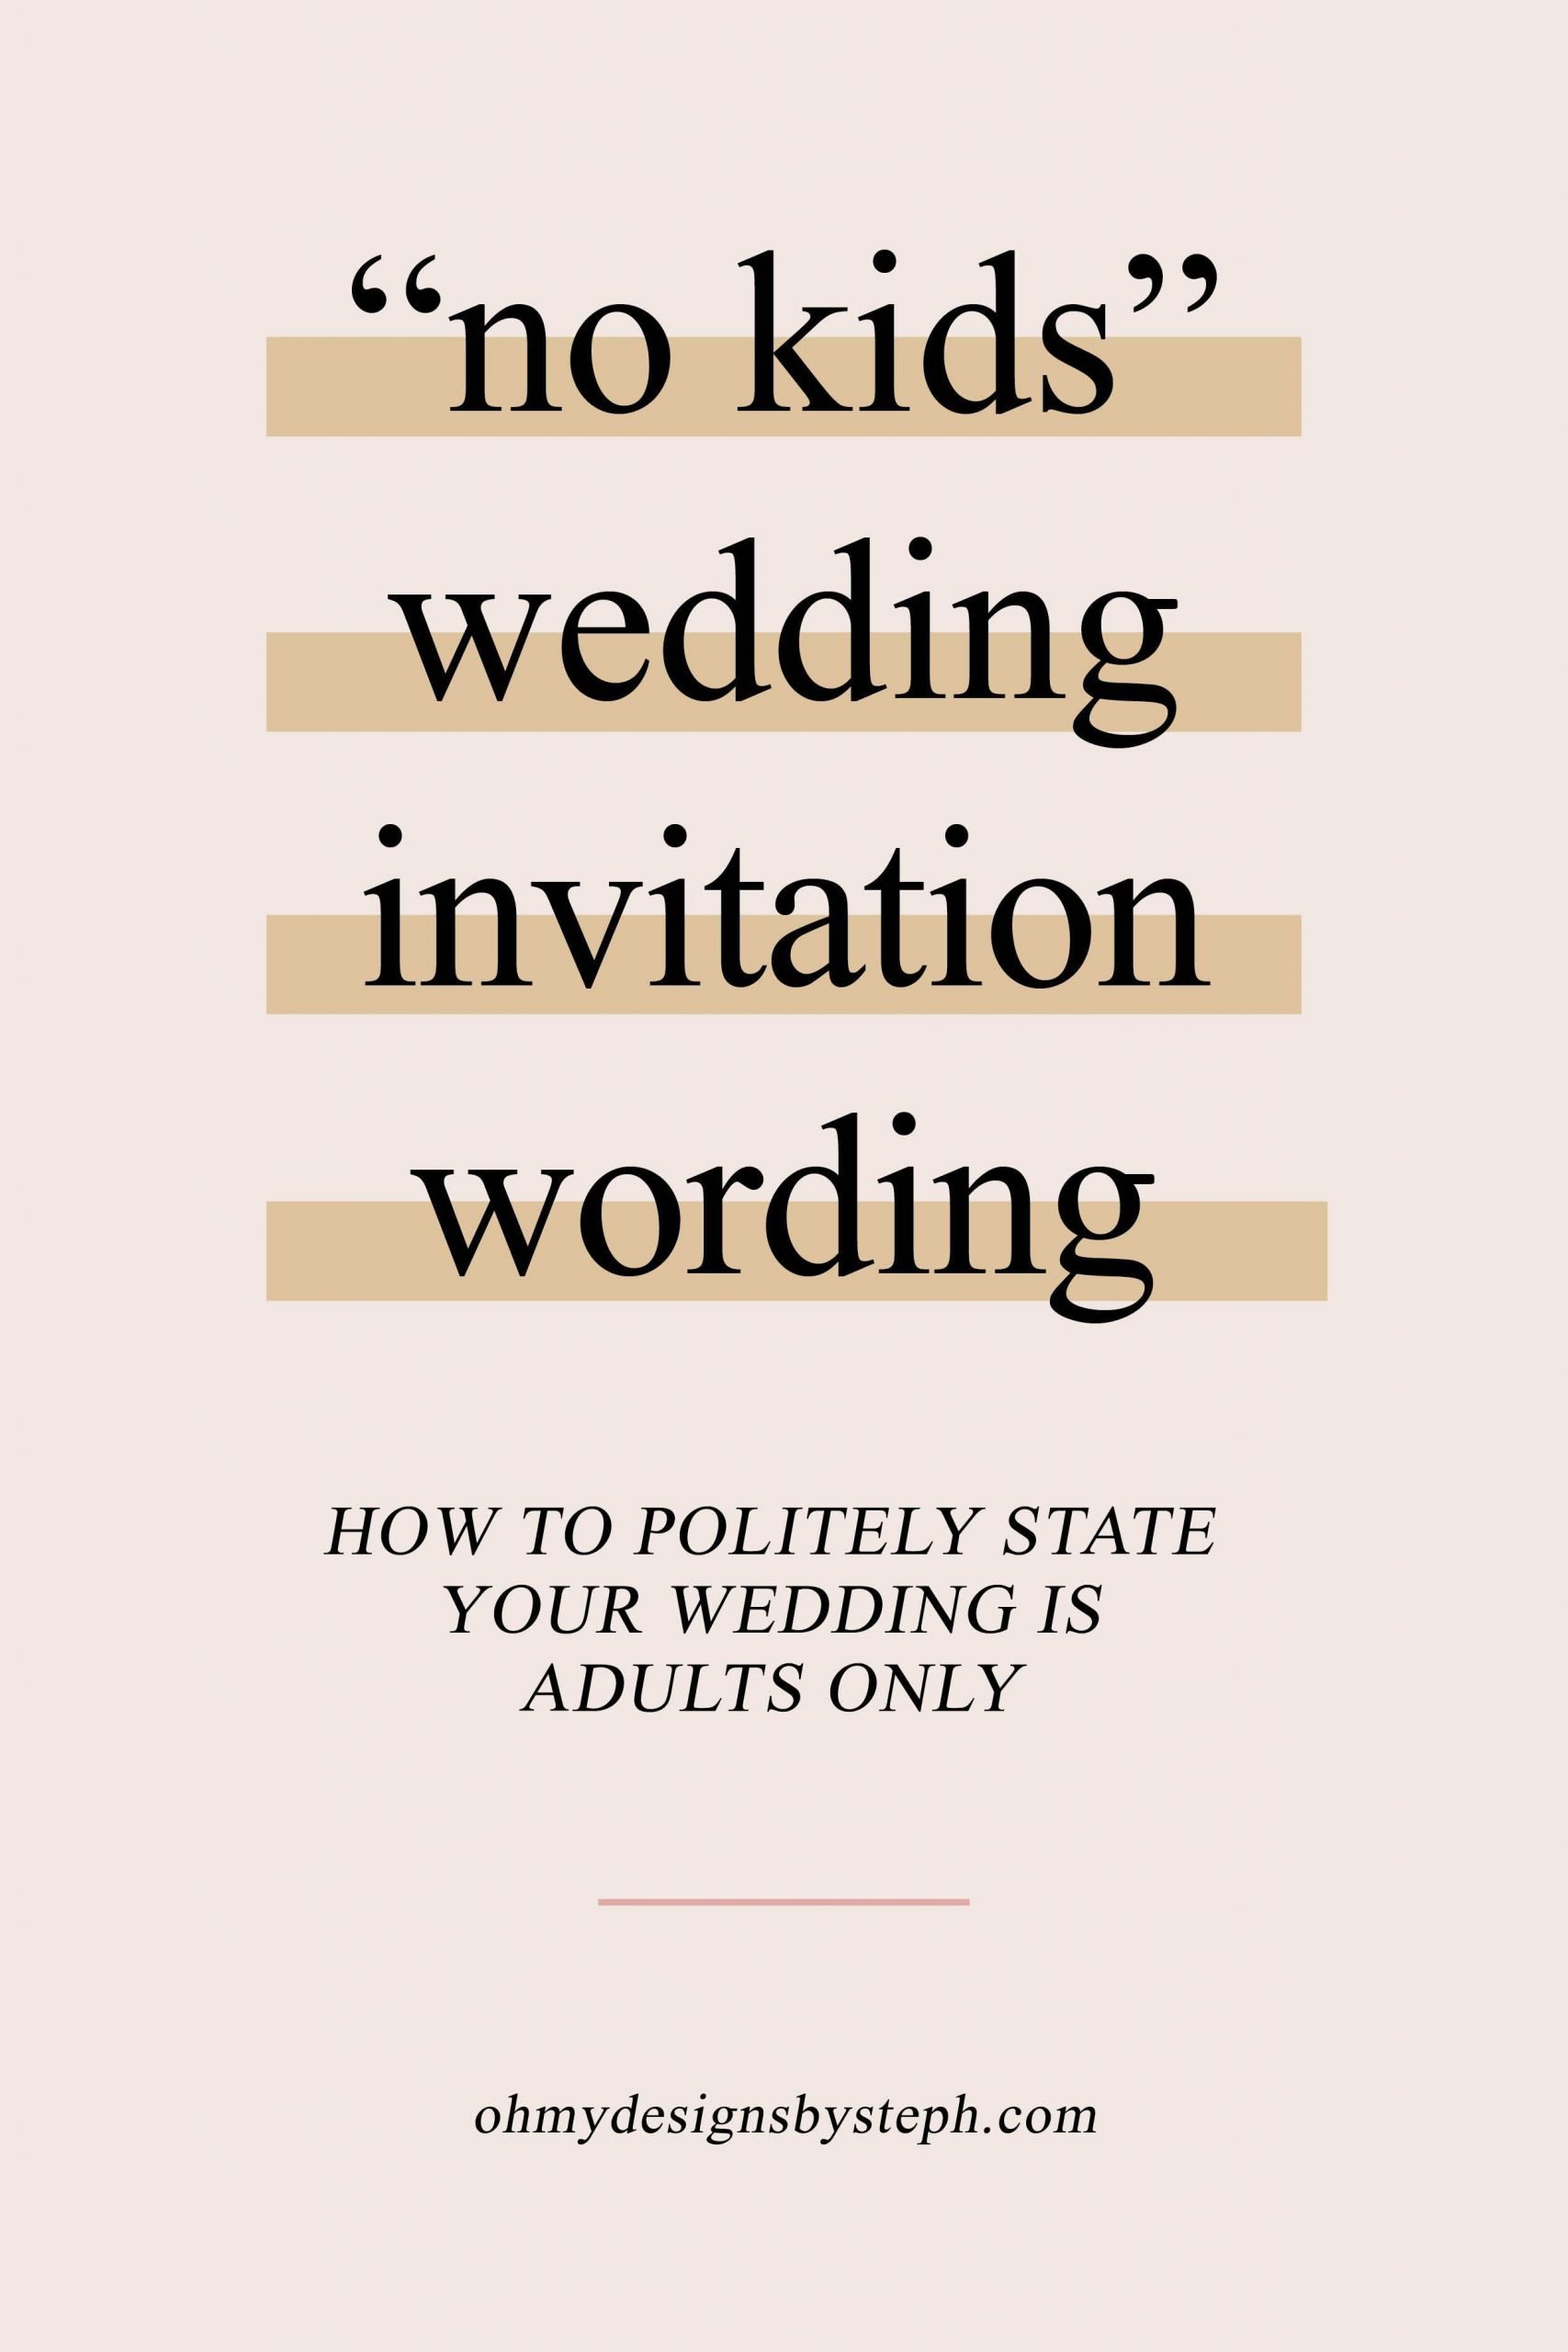 âNo Kidsâ? Wedding Invitation Wording